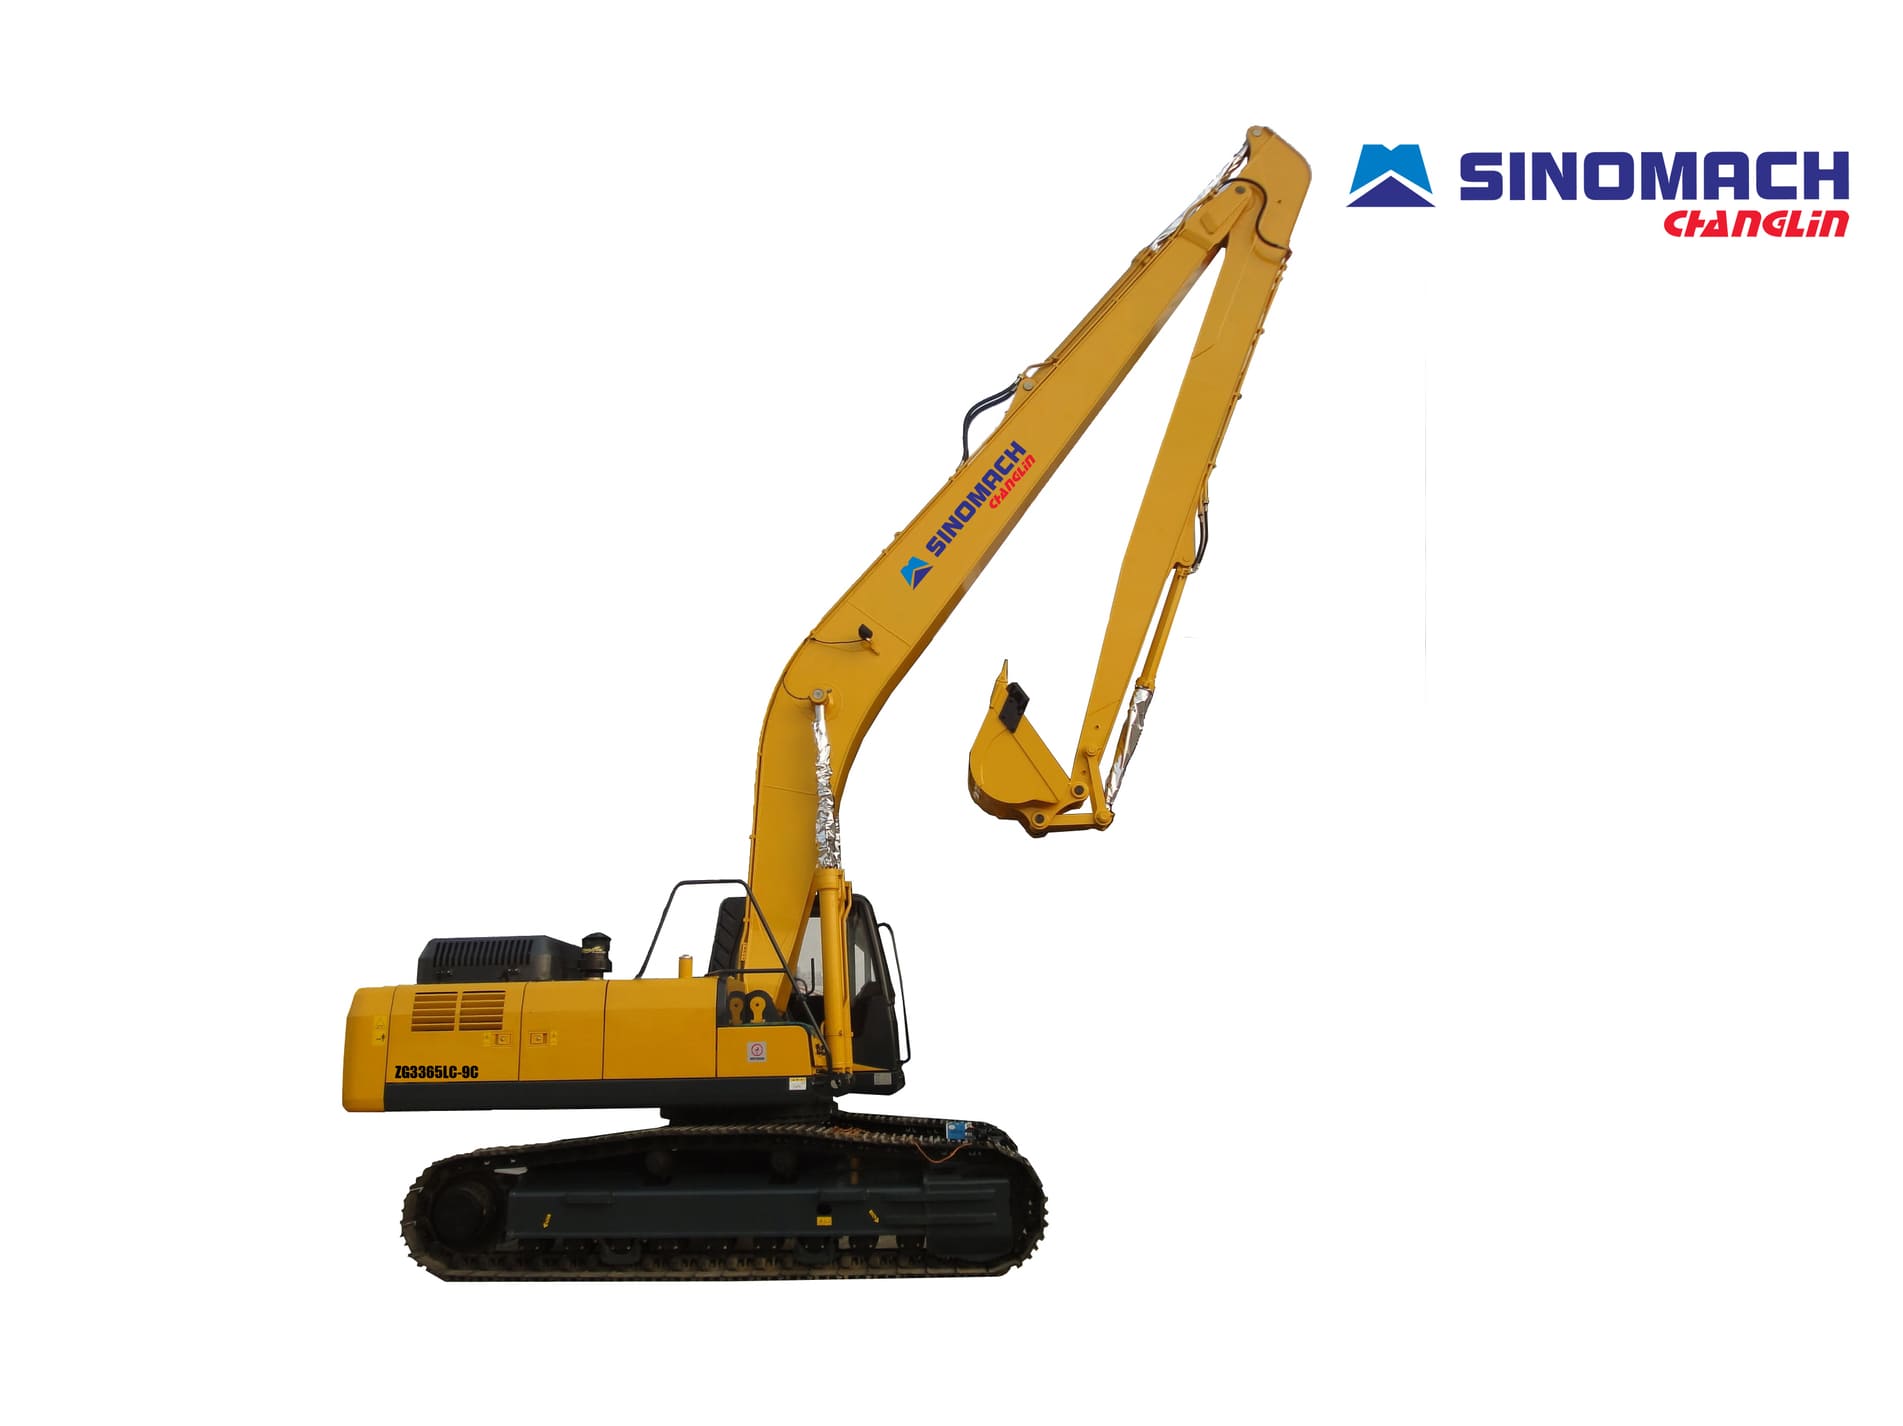 Excavator Sinimach Changlin Longarm Zg3365lc 9c Sm